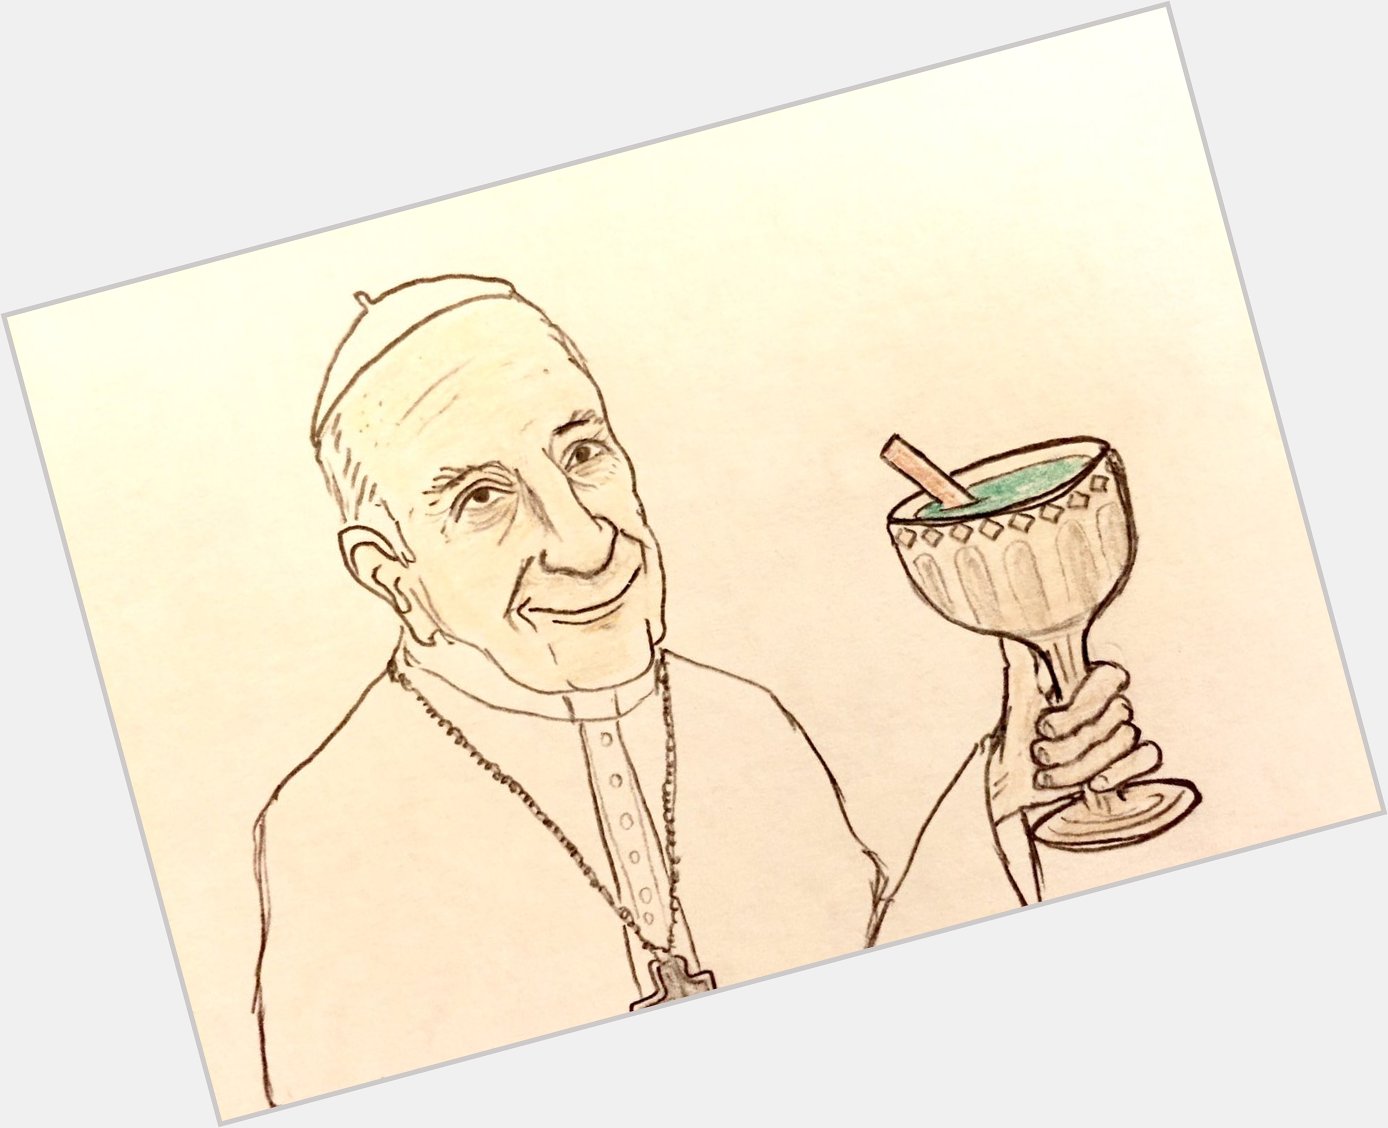 Happy birthday, Pope Francis! 